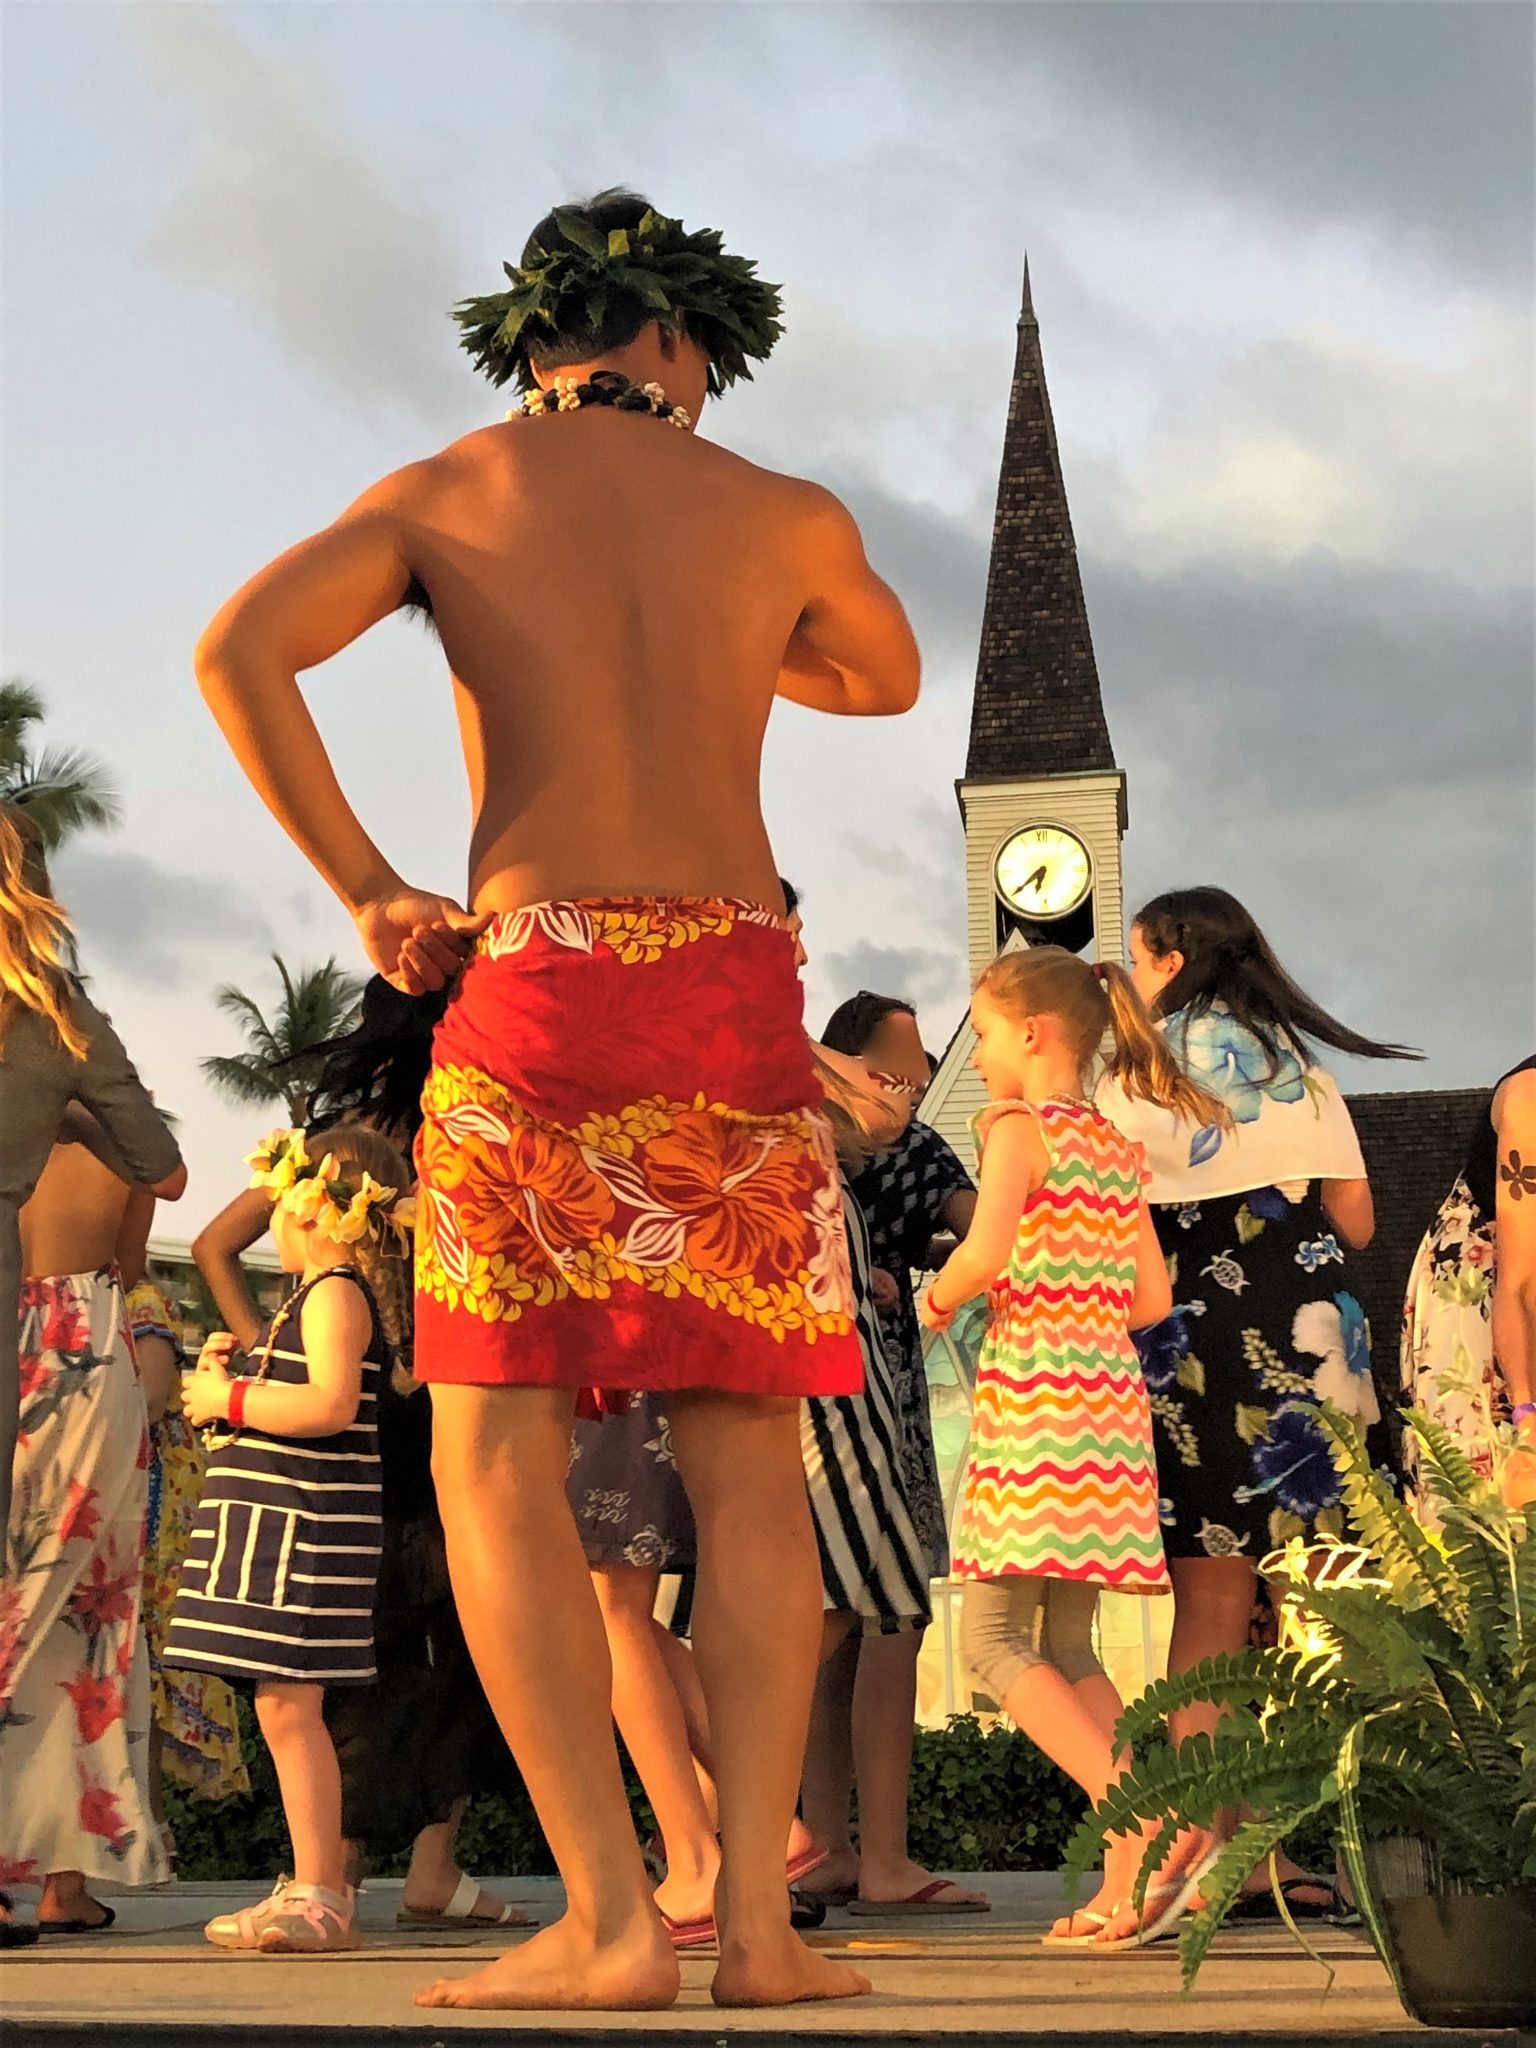 The Best Luau in Maui The 'Aha’aina Wailea Luau, at Grand Wailea Resort